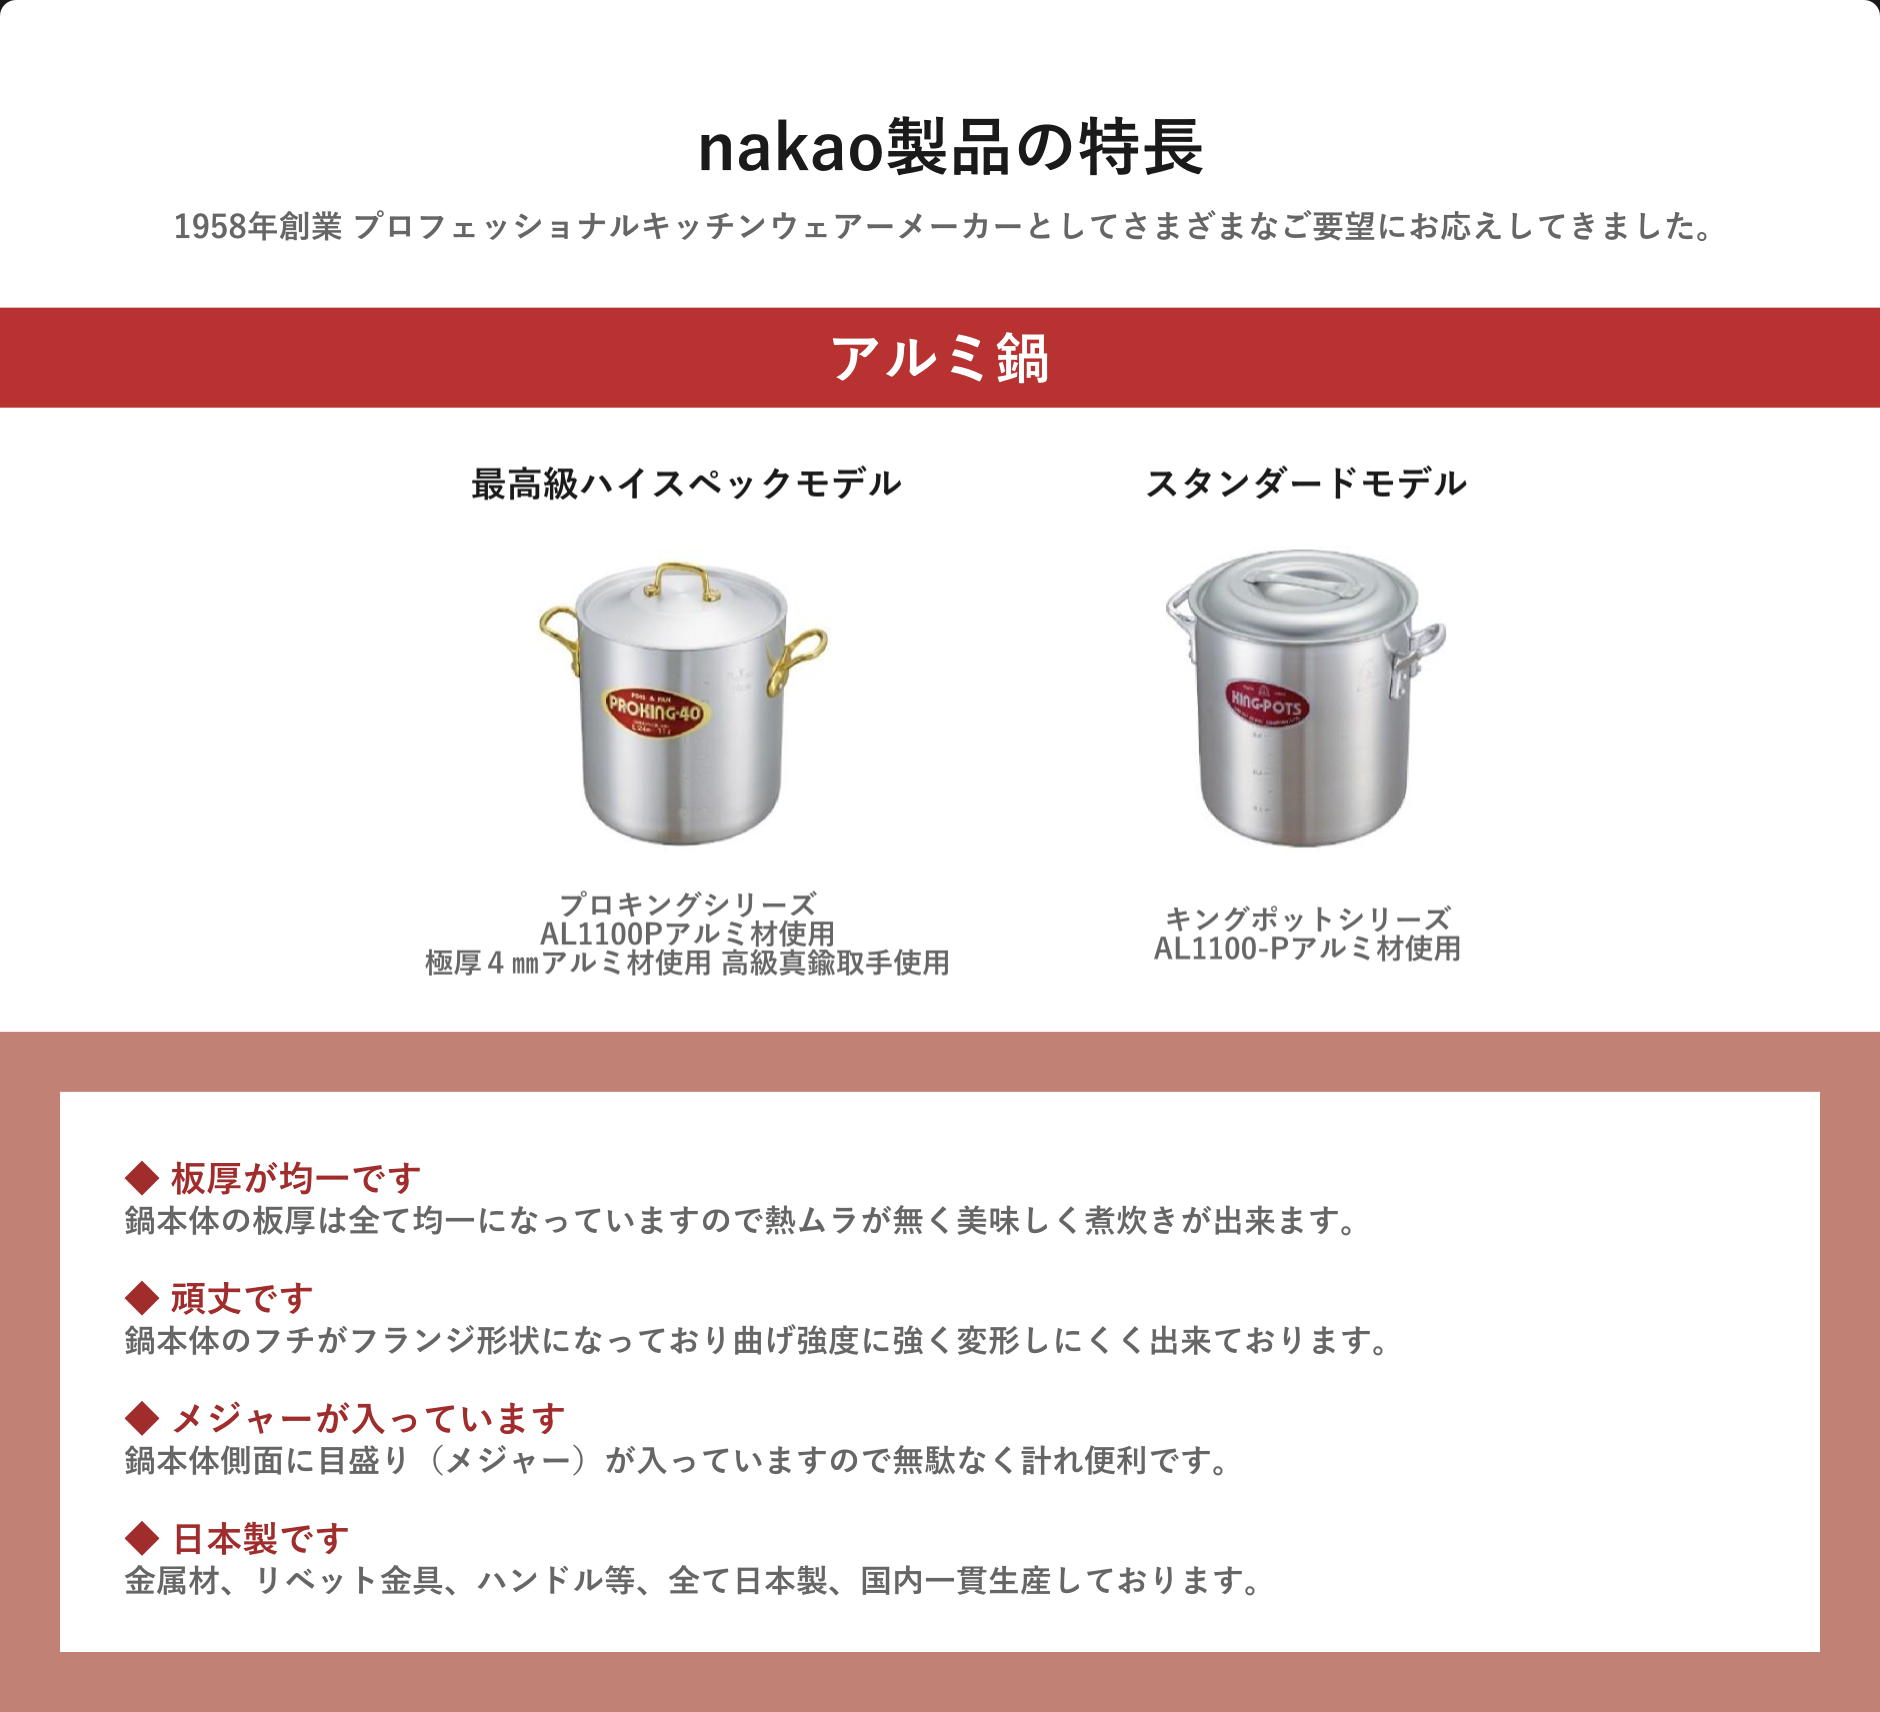 nakao製品の特長